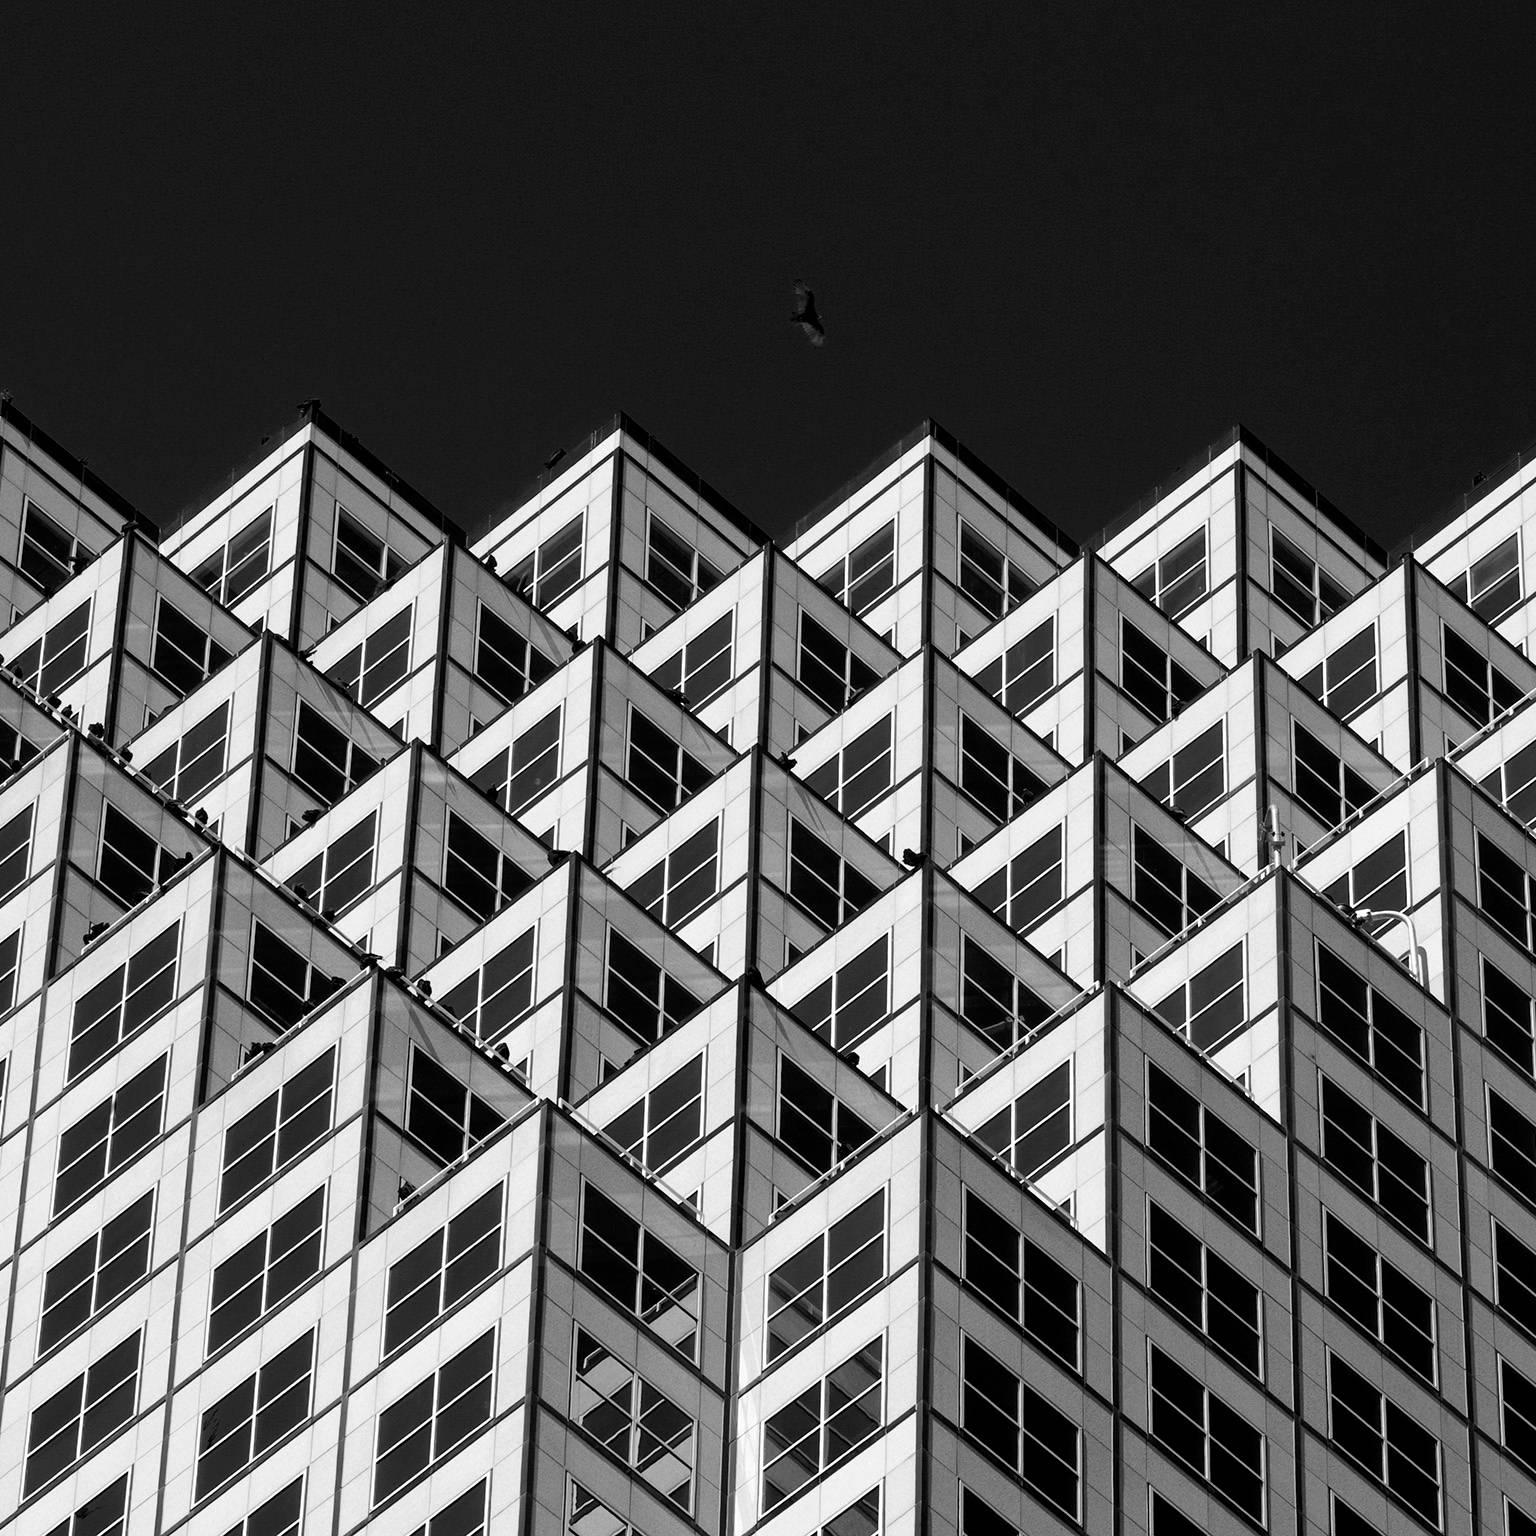 Luca Artioli Black and White Photograph - Miami Downtown 1, Black and White Landscape Architectural Photograph